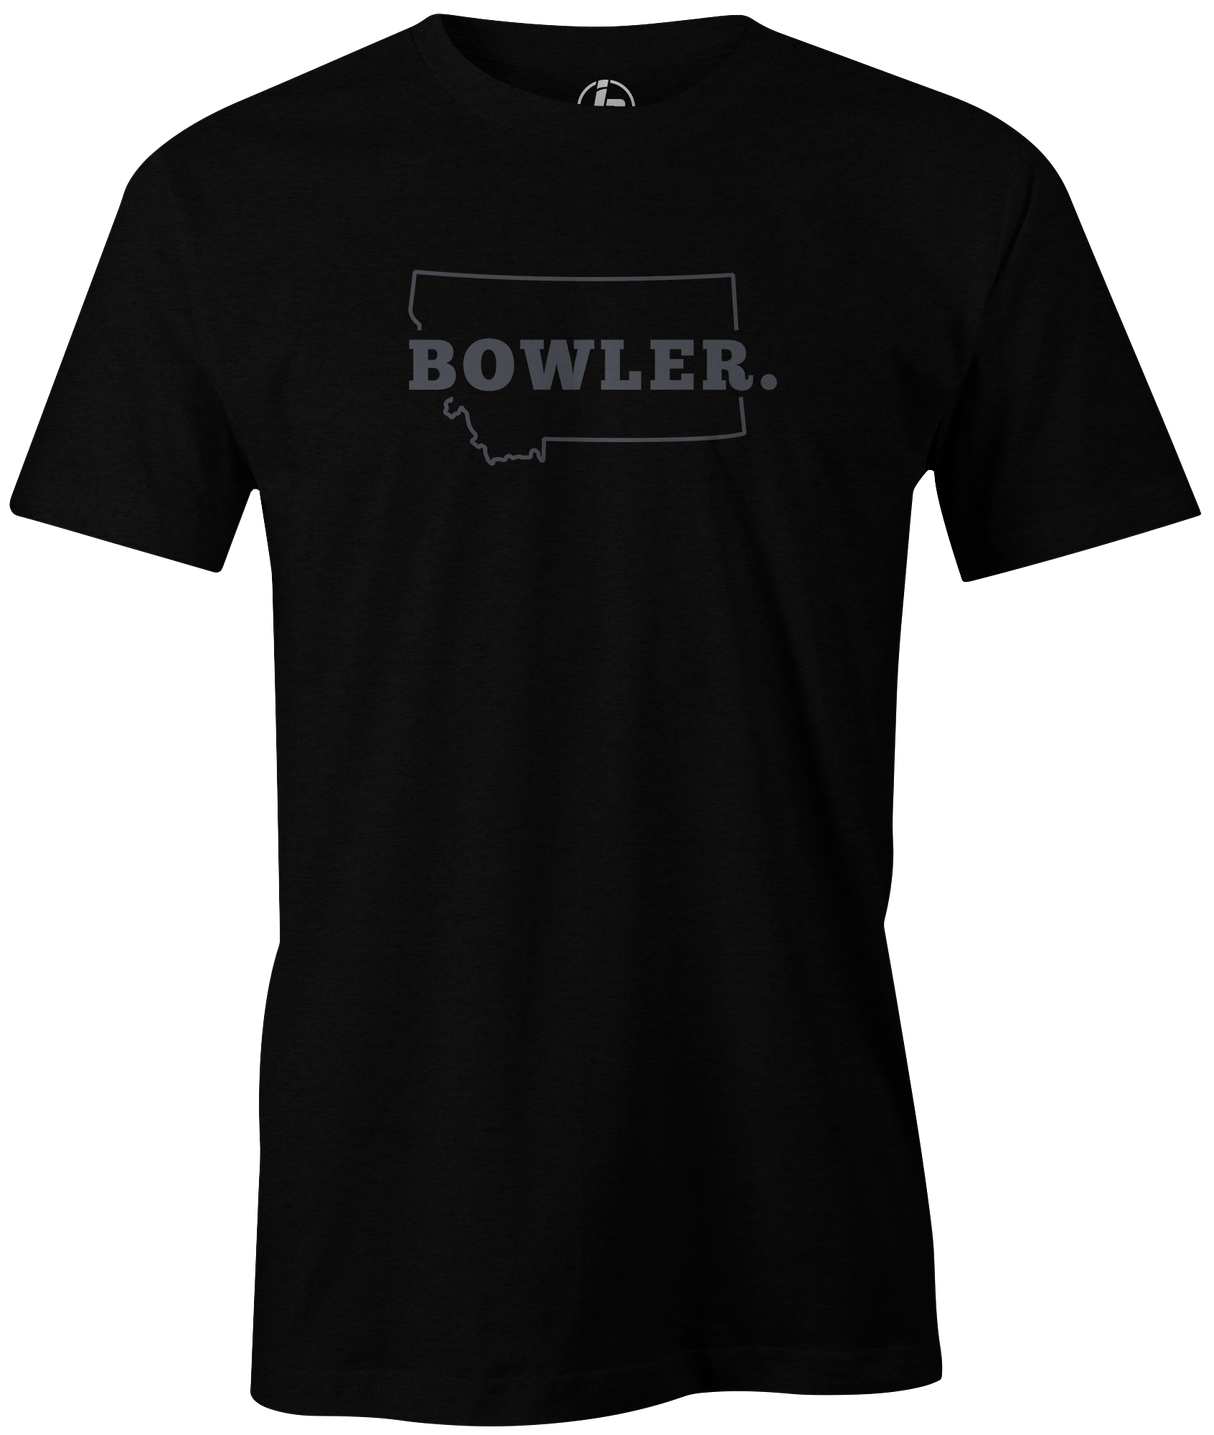 Montana State Men's Bowling T-shirt, Black, Cool, novelty, tshirt, tee, tee-shirt, tee shirt, teeshirt, team, comfortable